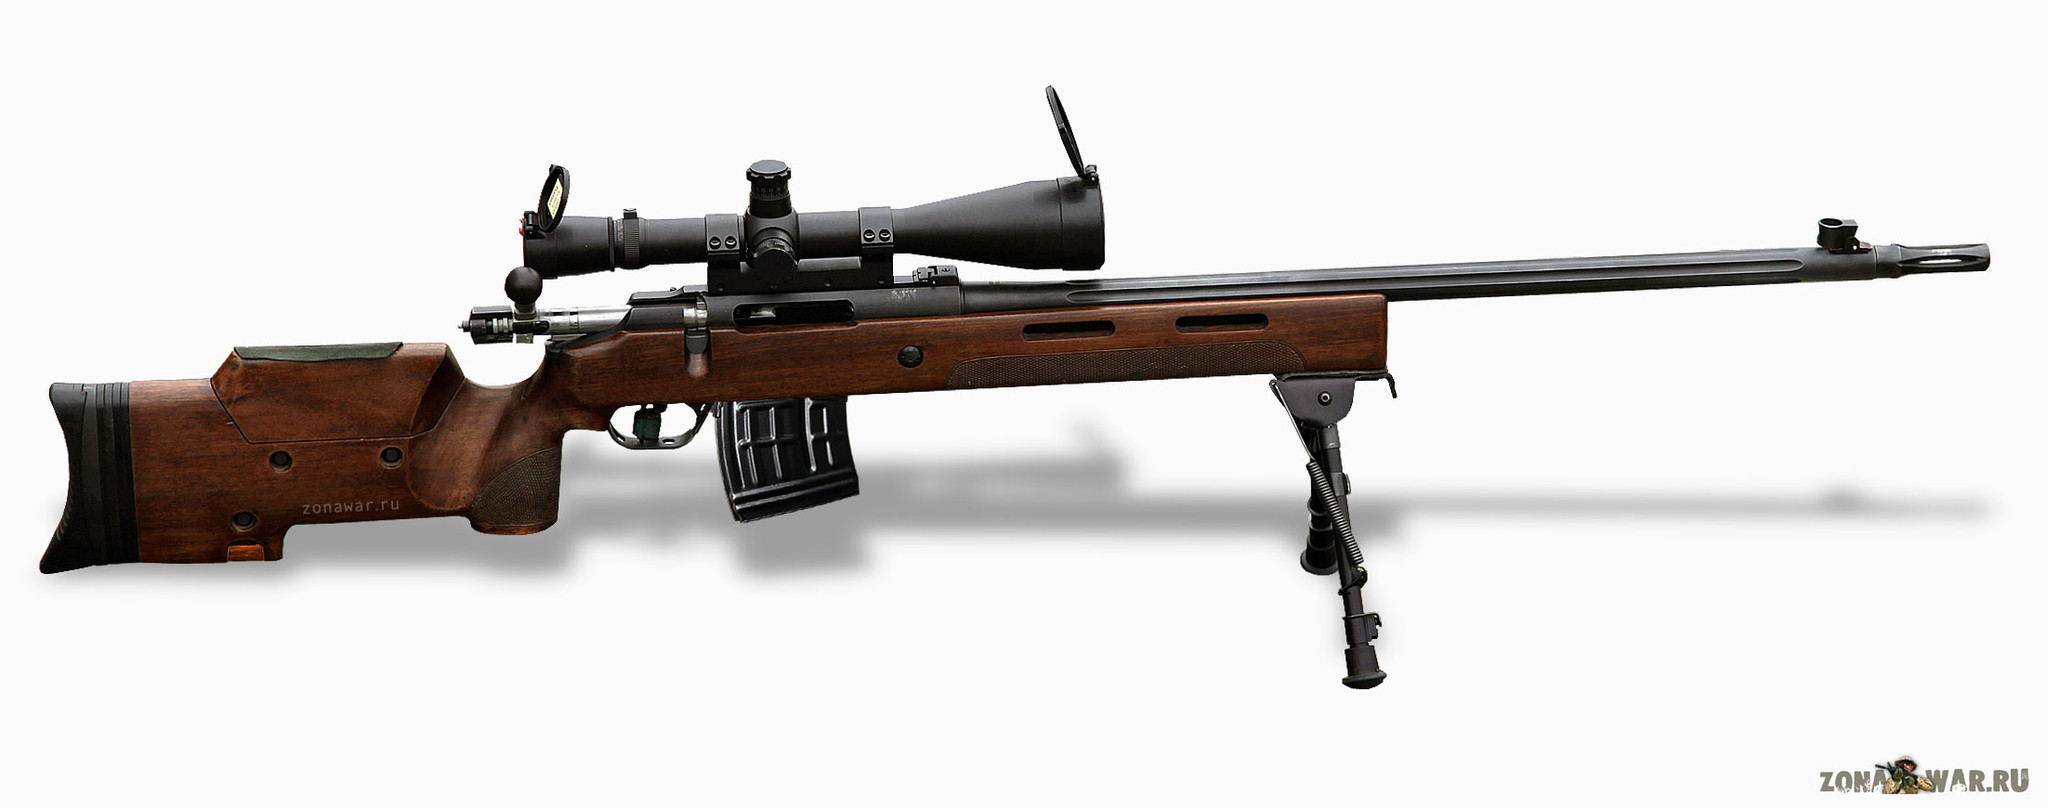 MTs-116M sniper rifle